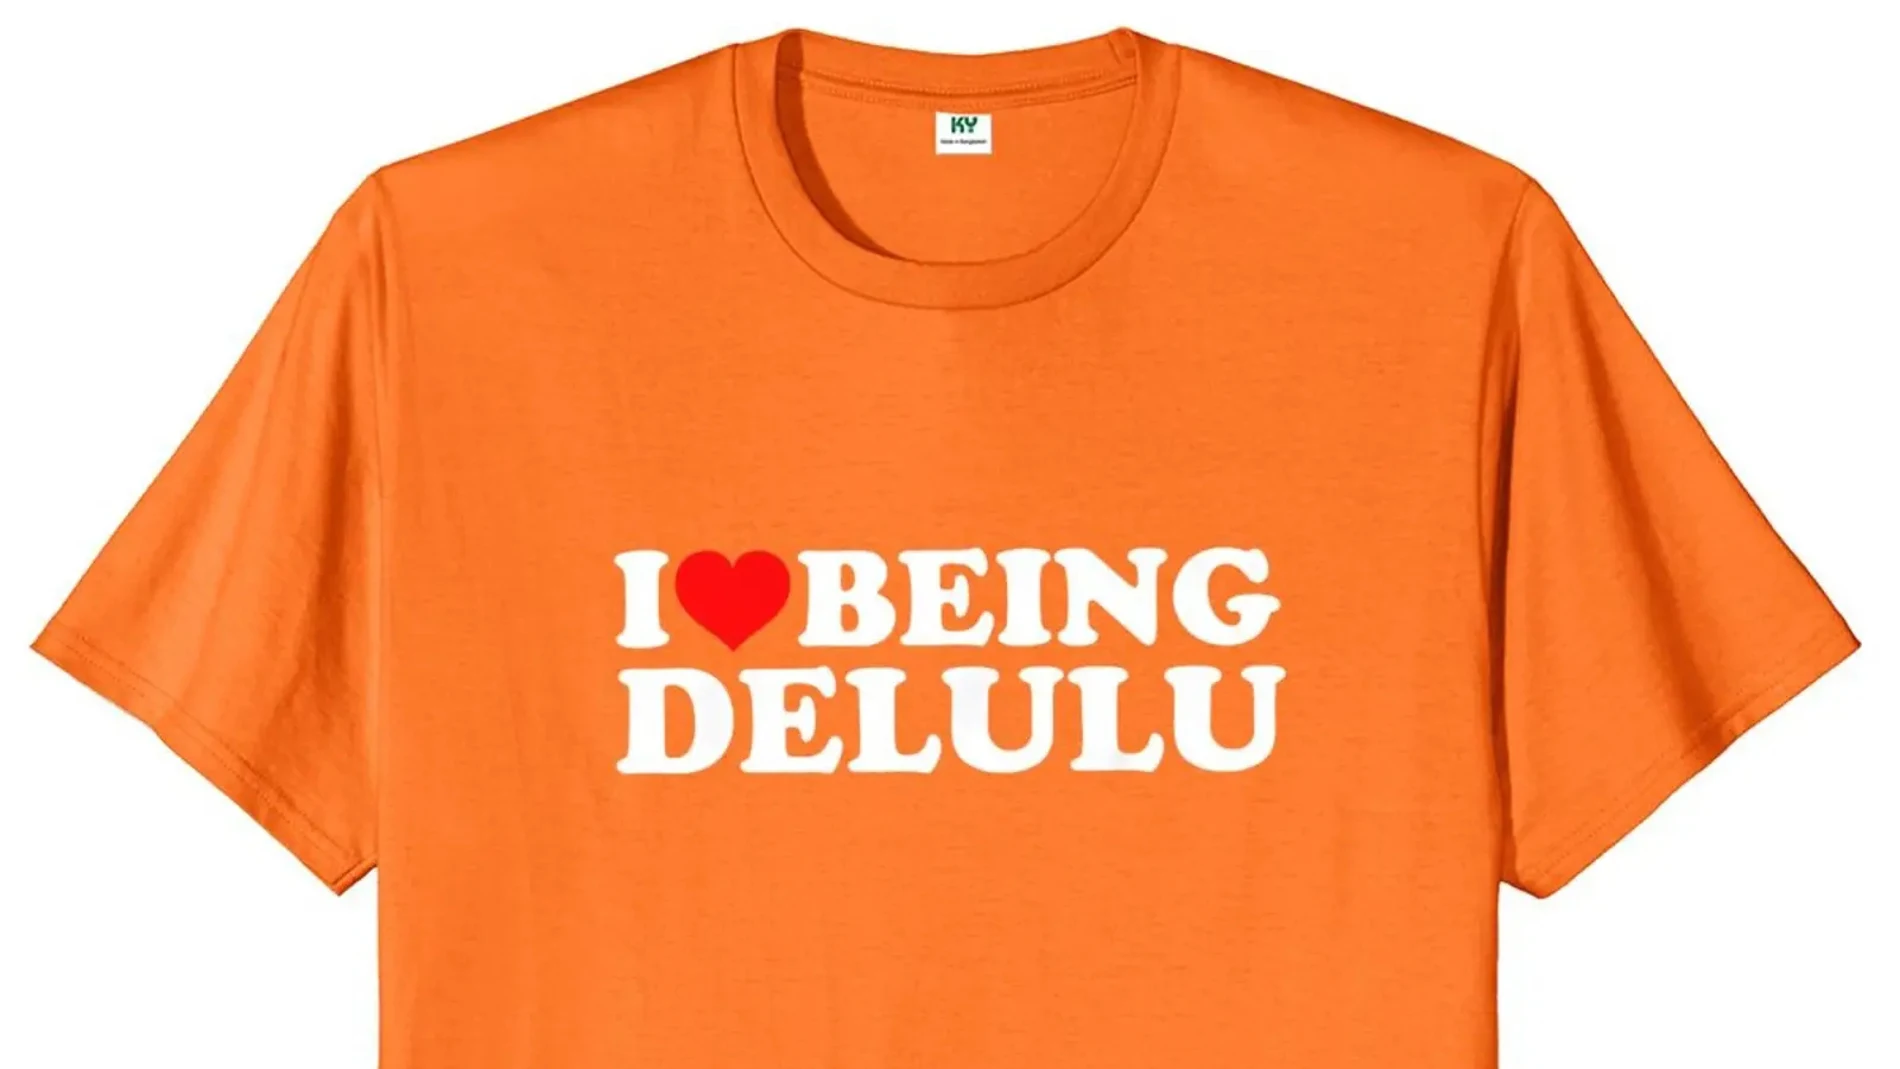 "Delulu", corriente filosófica impulsada en TikTok 